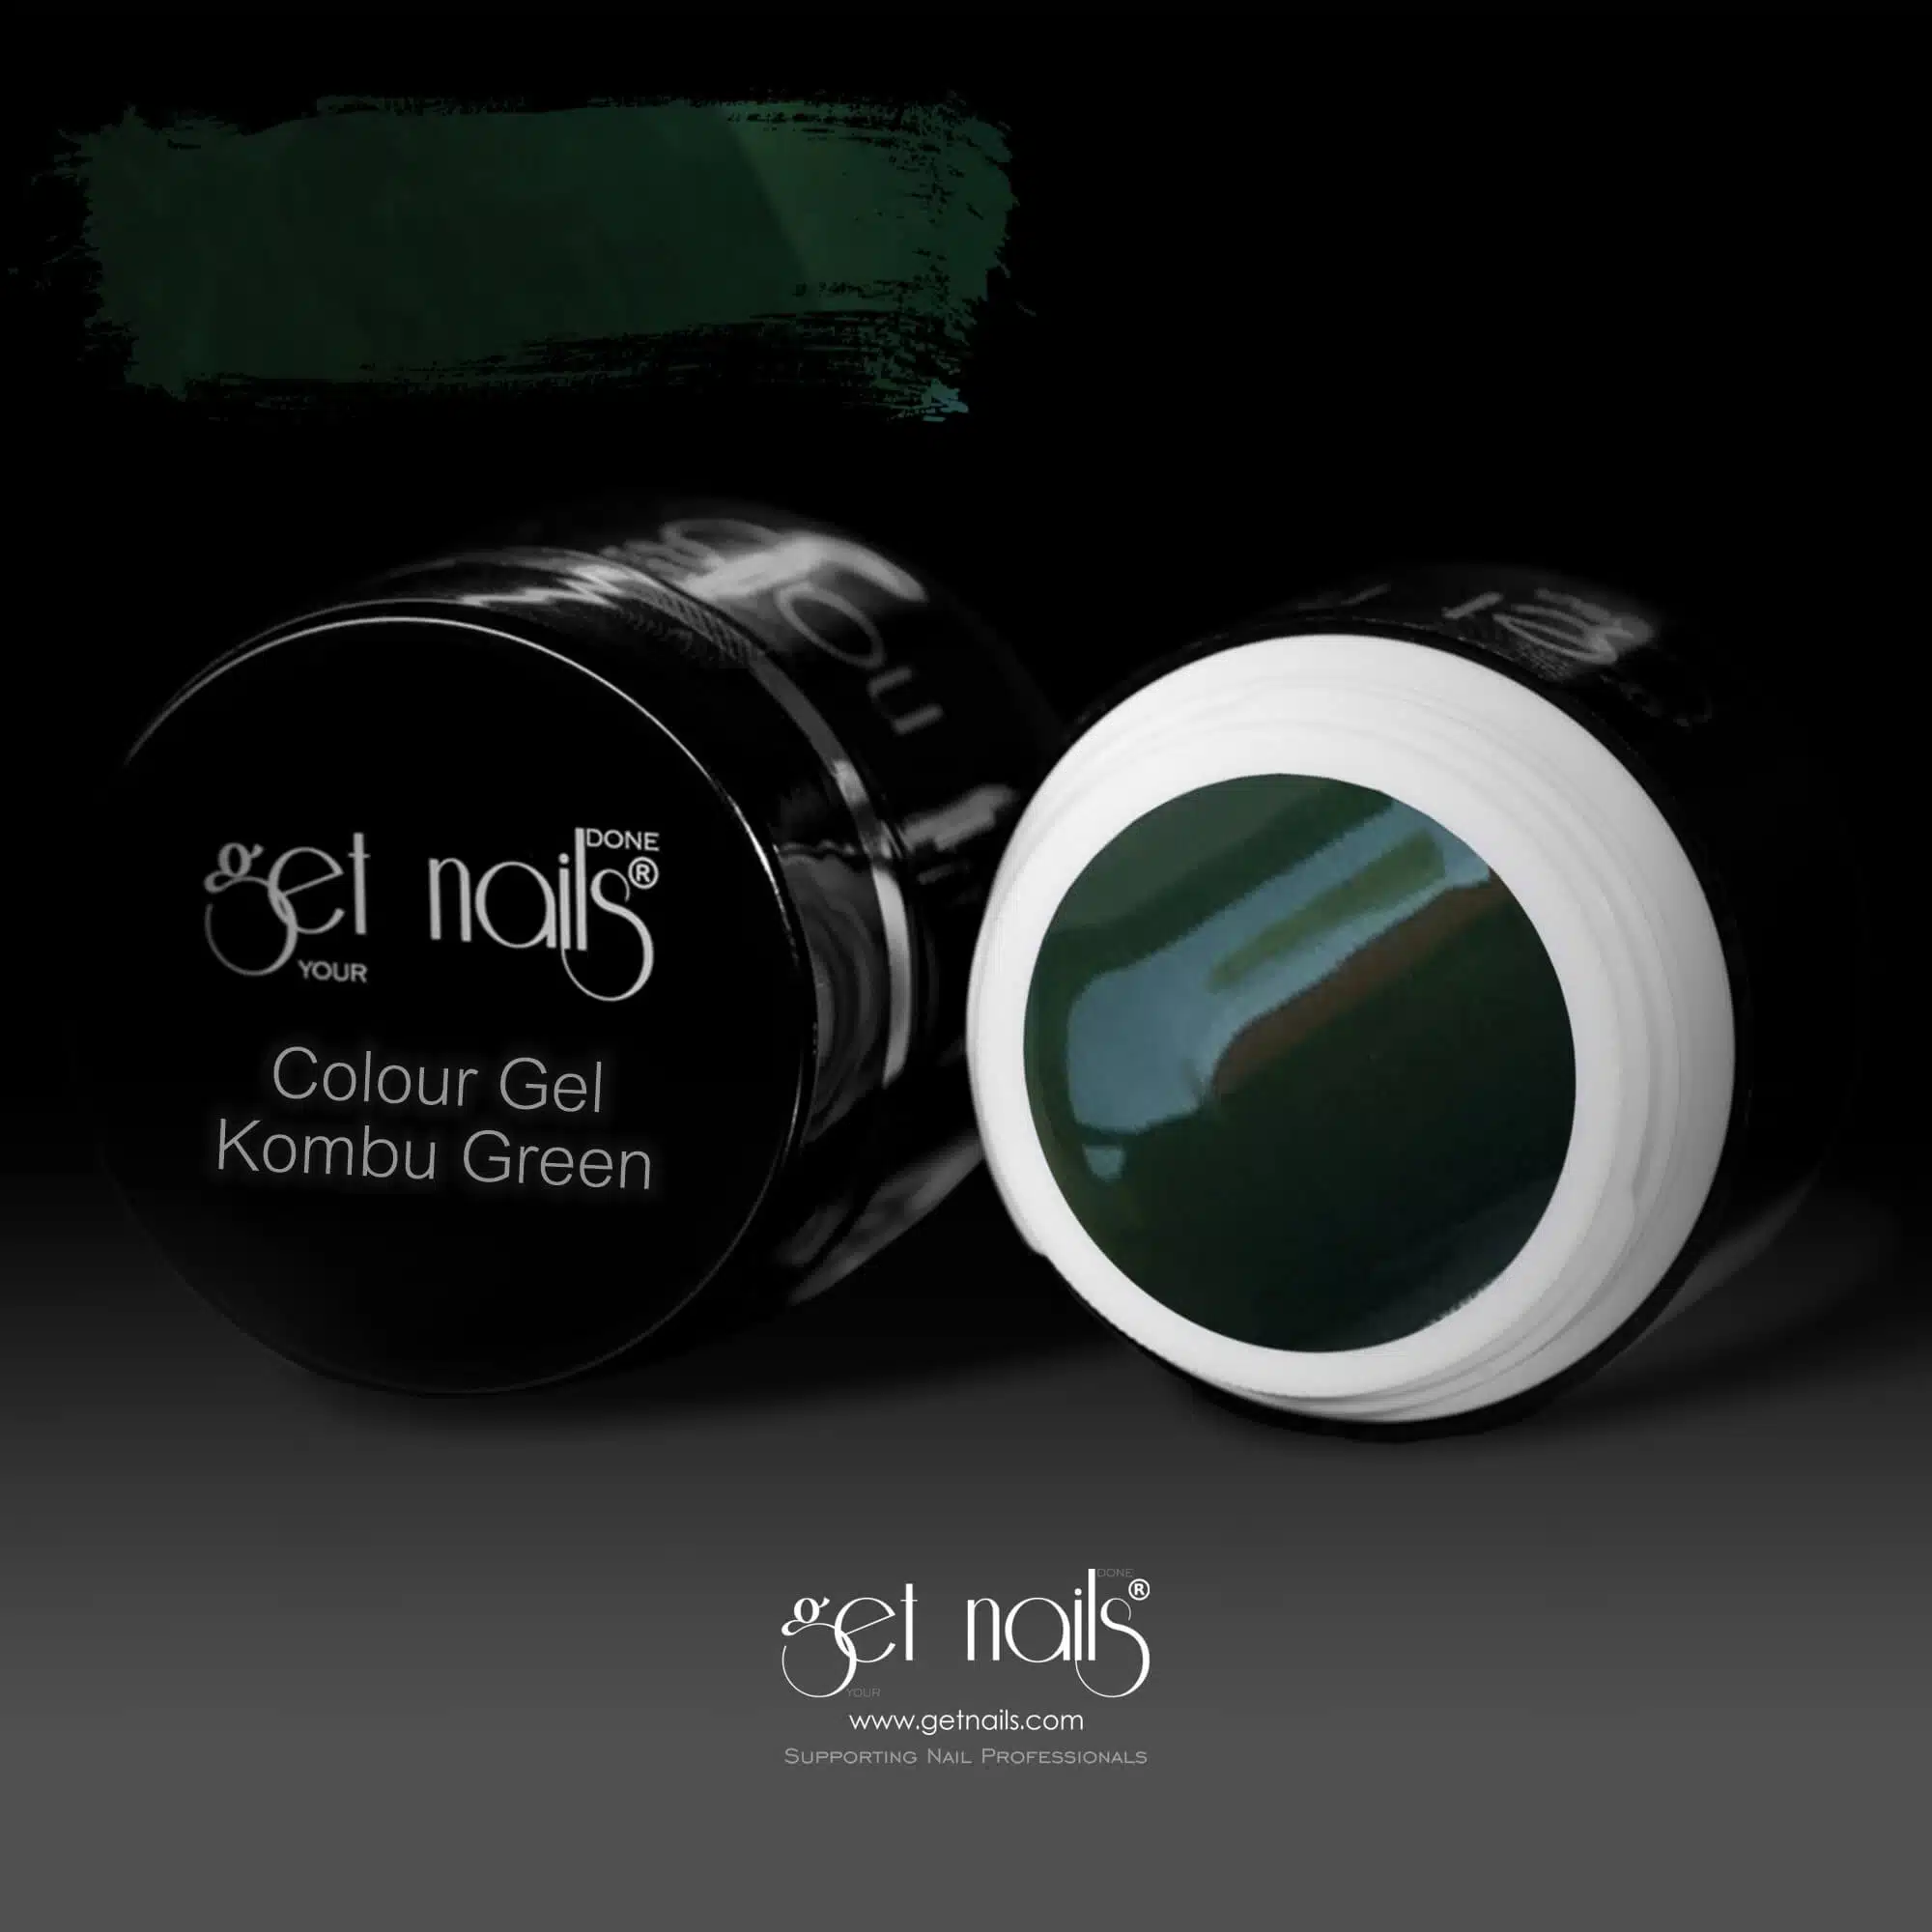 Get Nails Austria - Colour Gel Kombu Green 5g